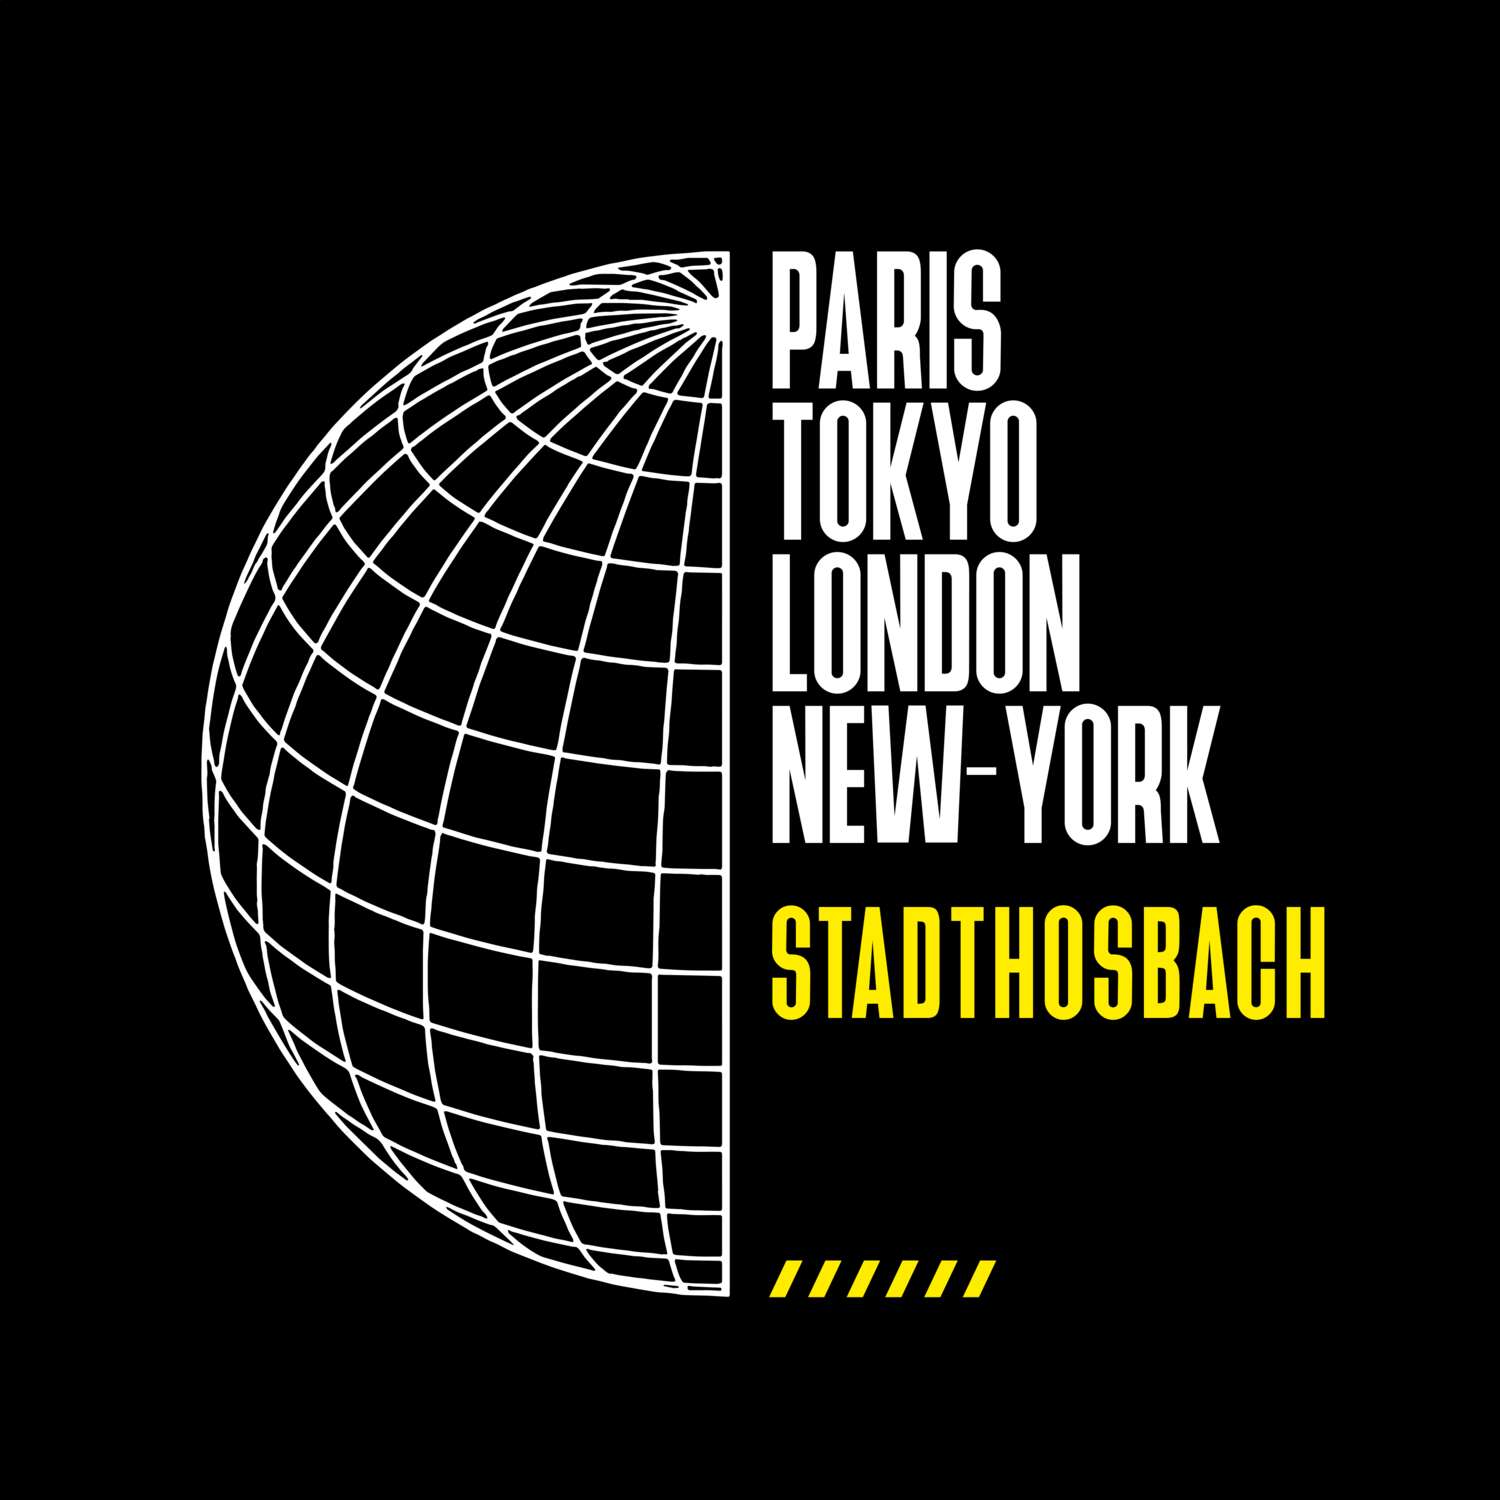 Stadthosbach T-Shirt »Paris Tokyo London«